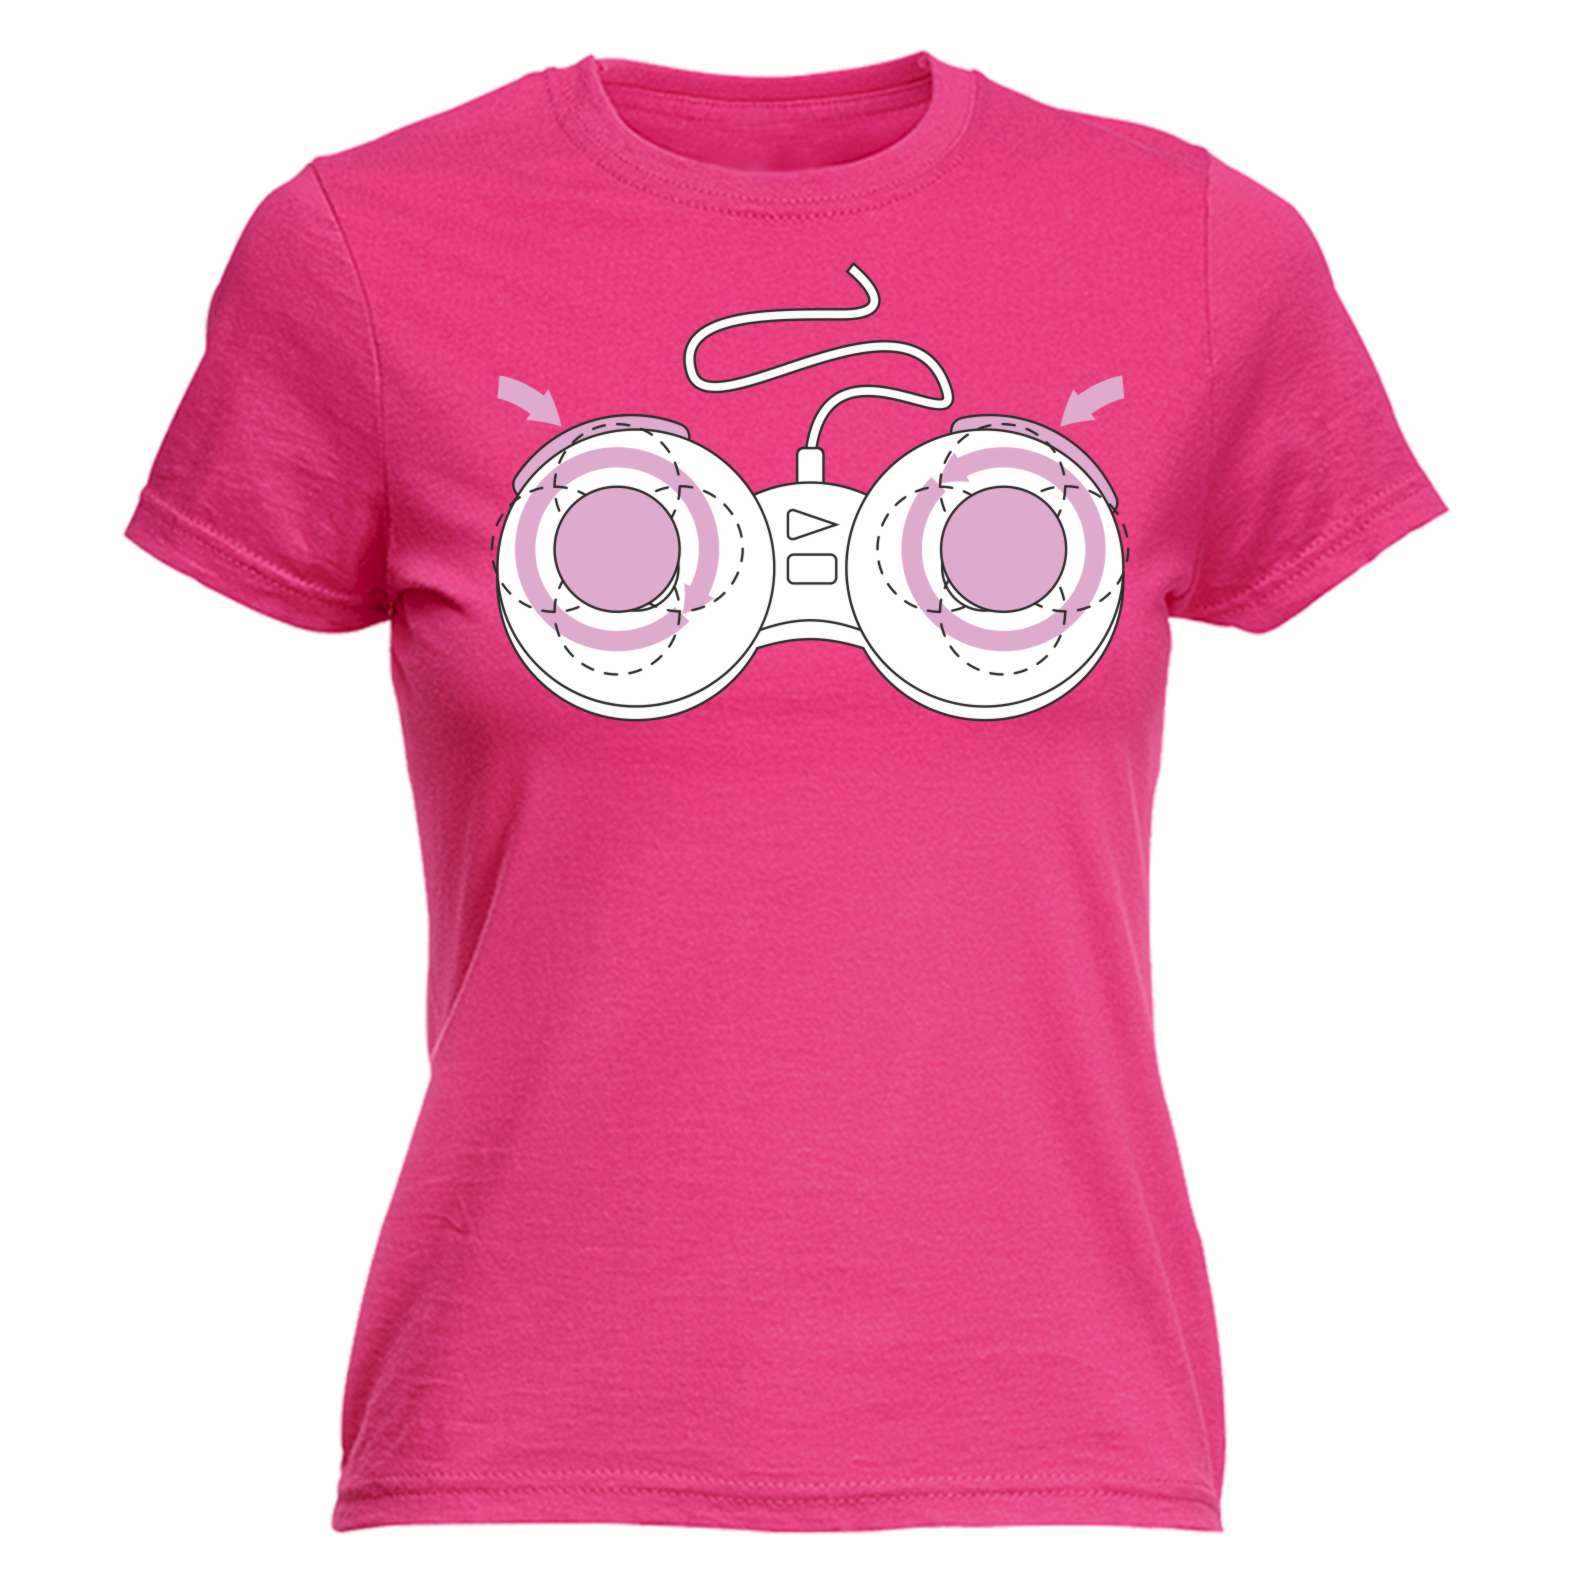 Boobs Boob Shirt . Adult Controller Shirt for Womens Playstation